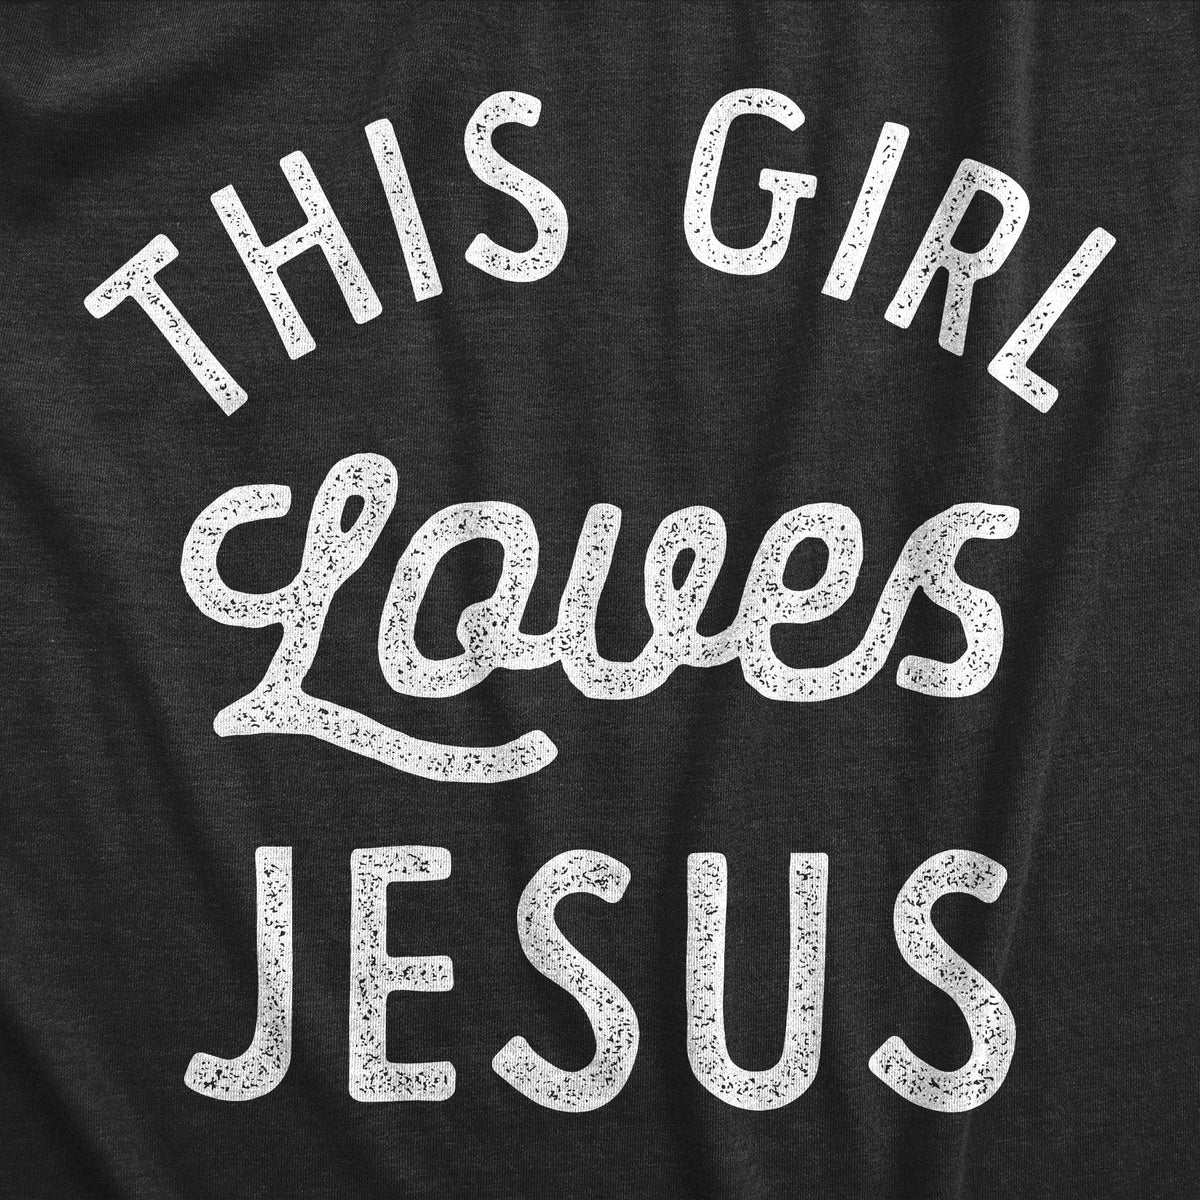 This Girl Loves Jesus Women&#39;s Tshirt  -  Crazy Dog T-Shirts